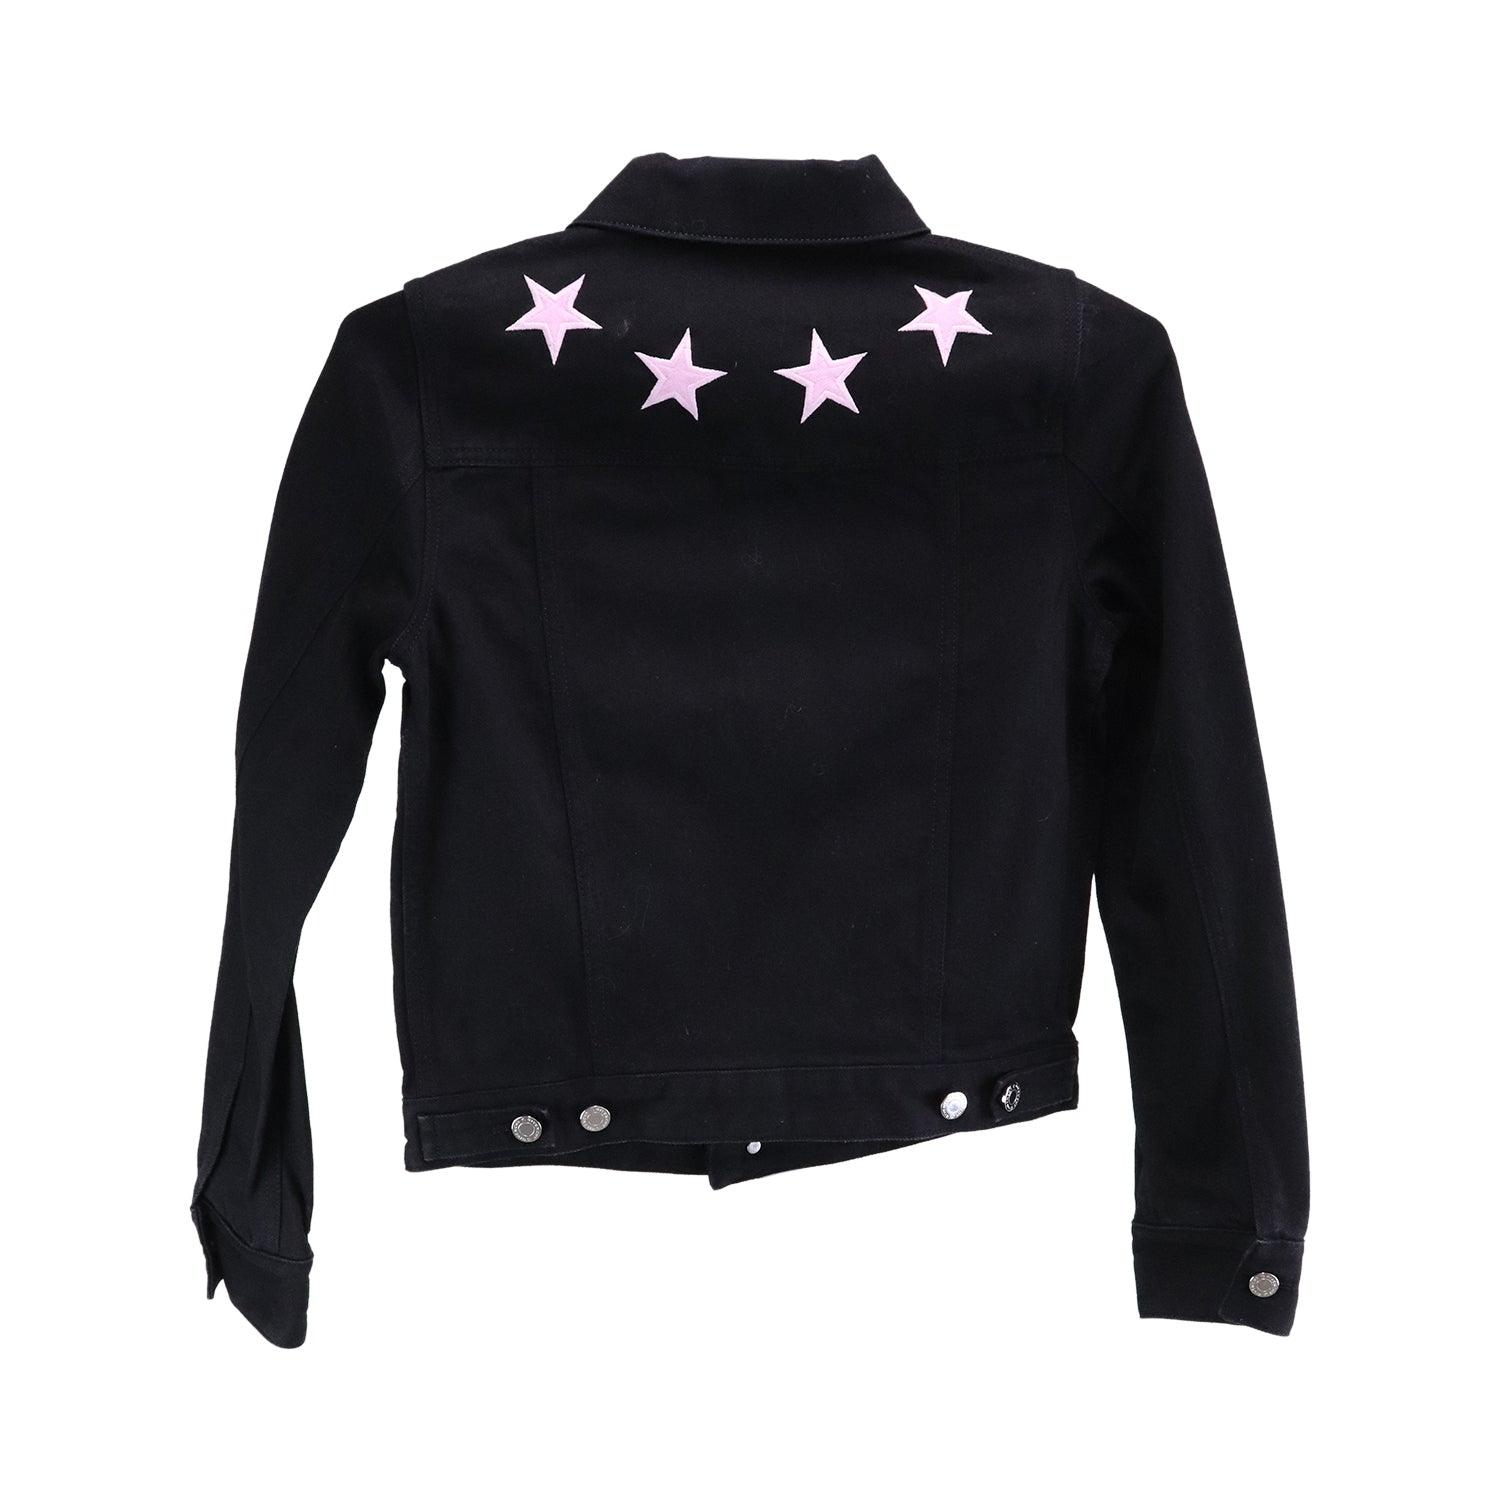 Givenchy Denim Jacket - Women's 36 - Fashionably Yours